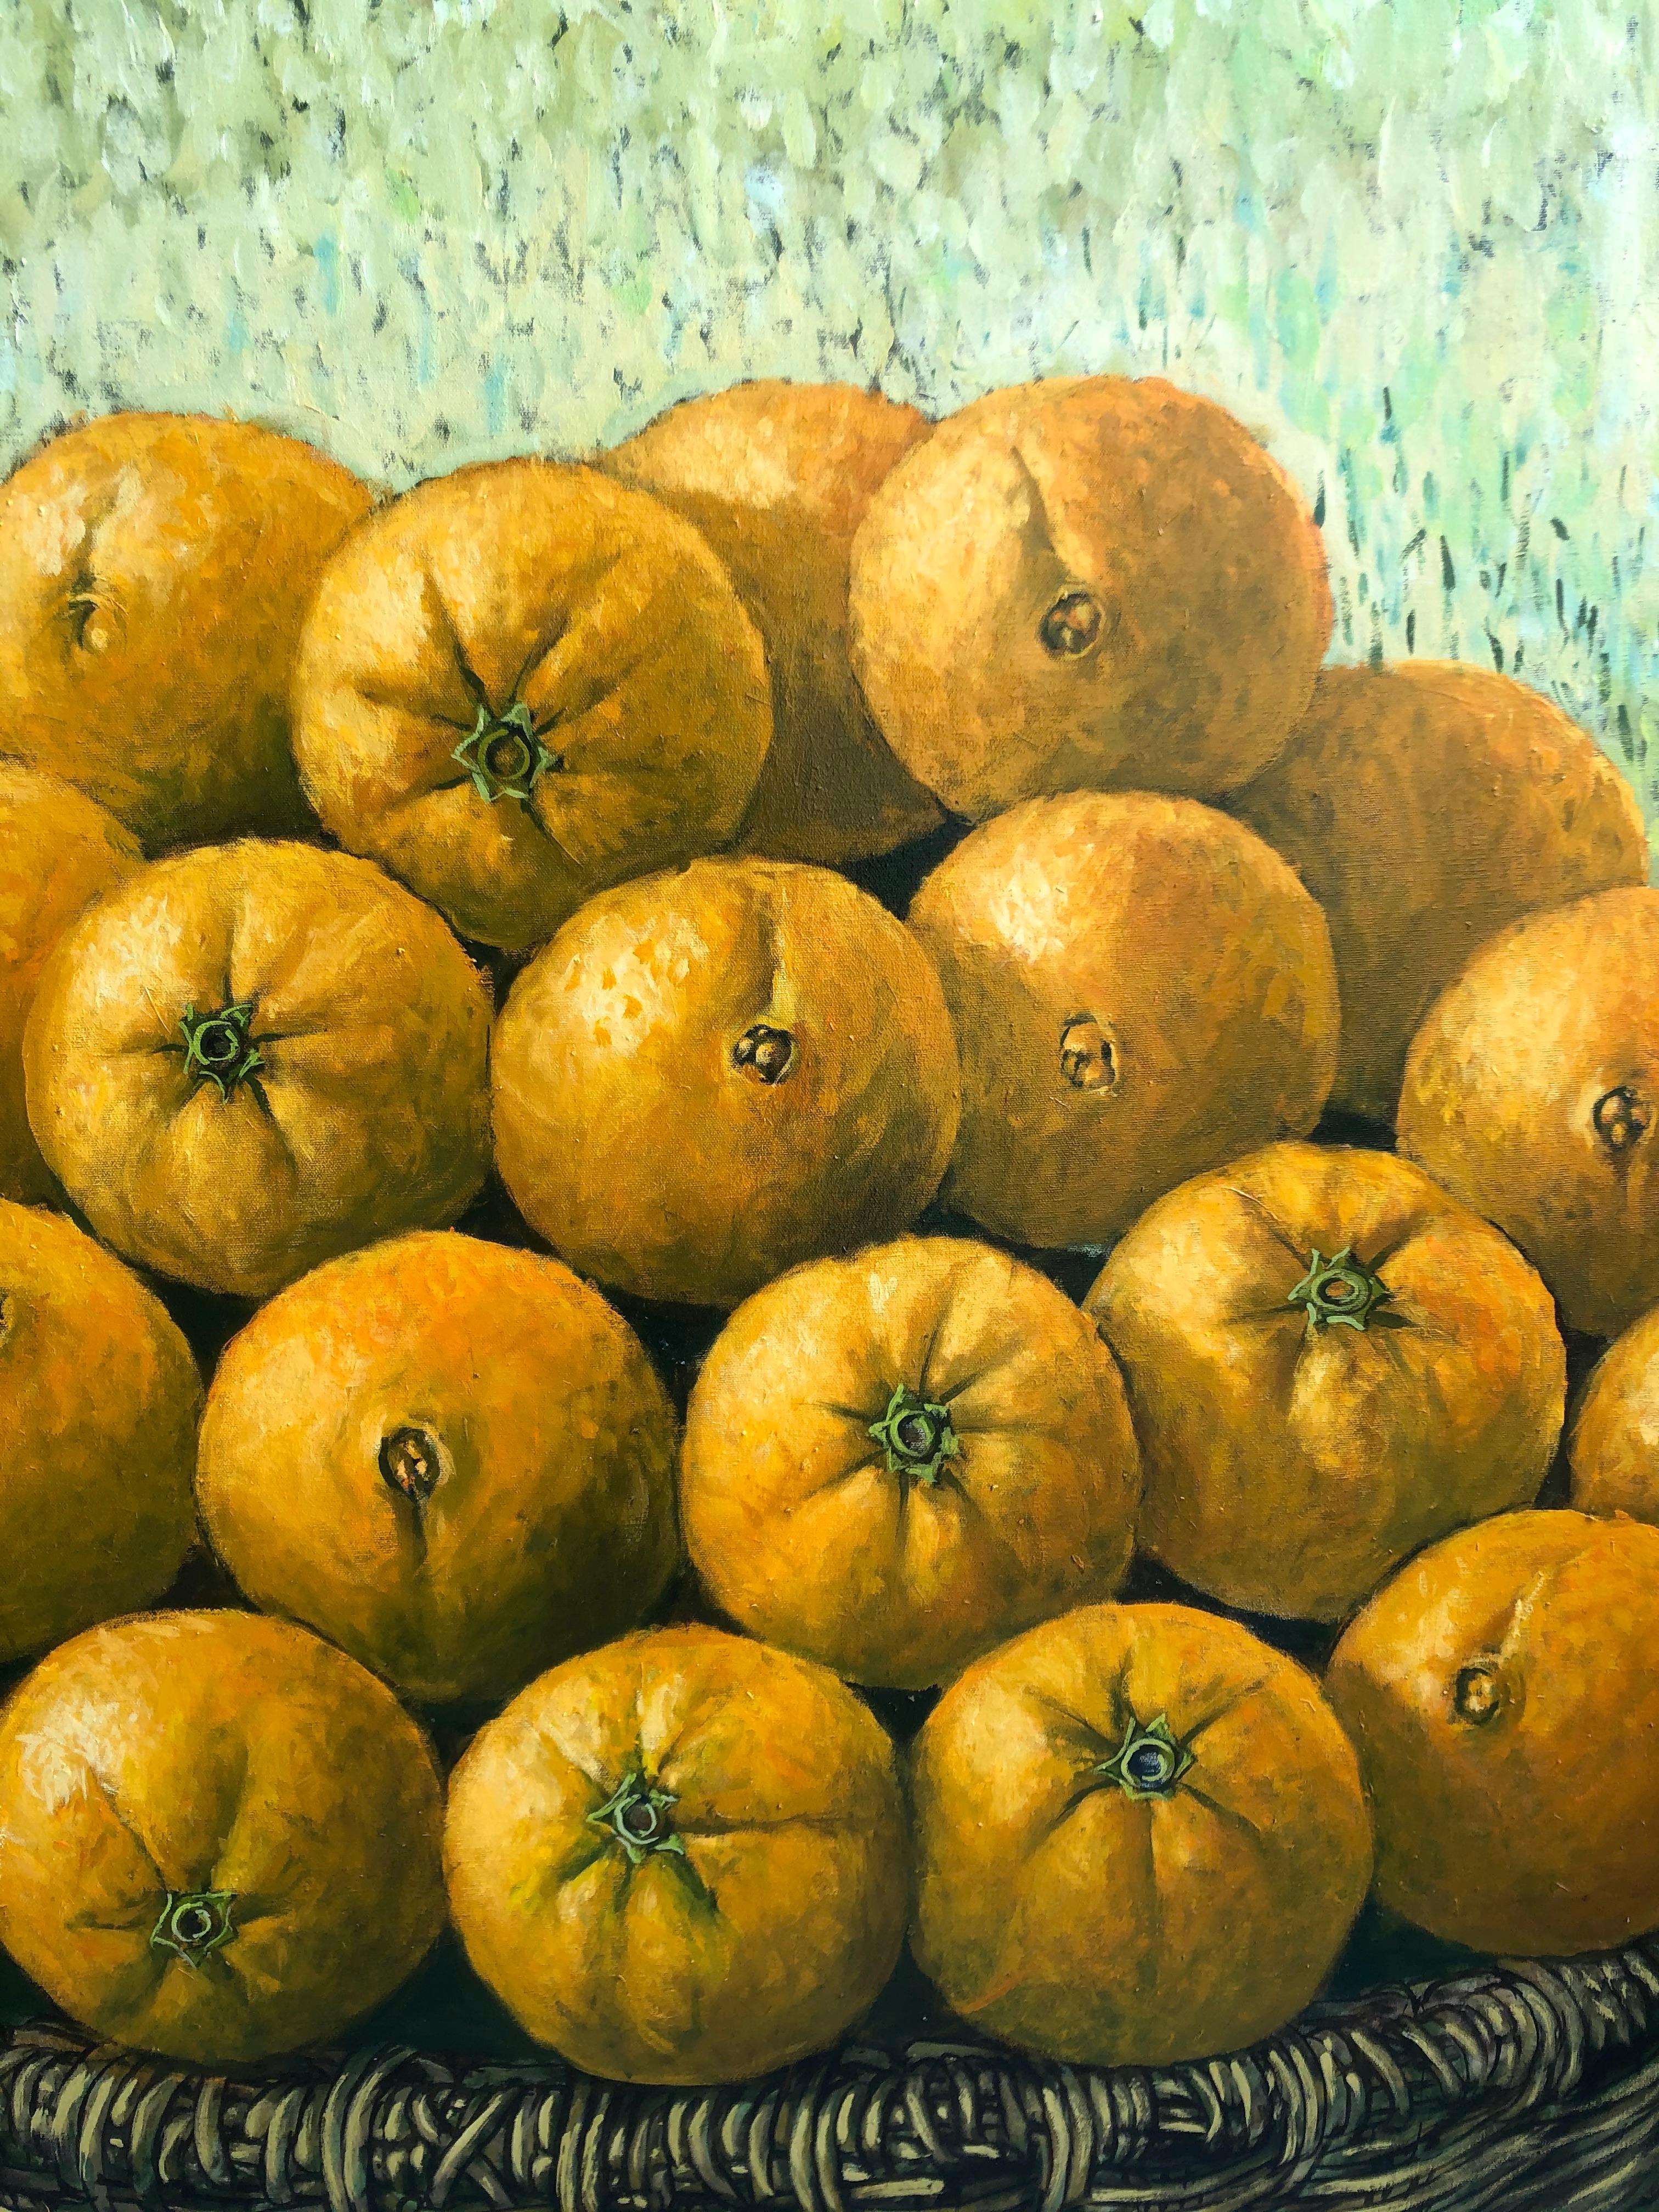  Oranges In The Basket   - Painting by Rafael Saldarriaga